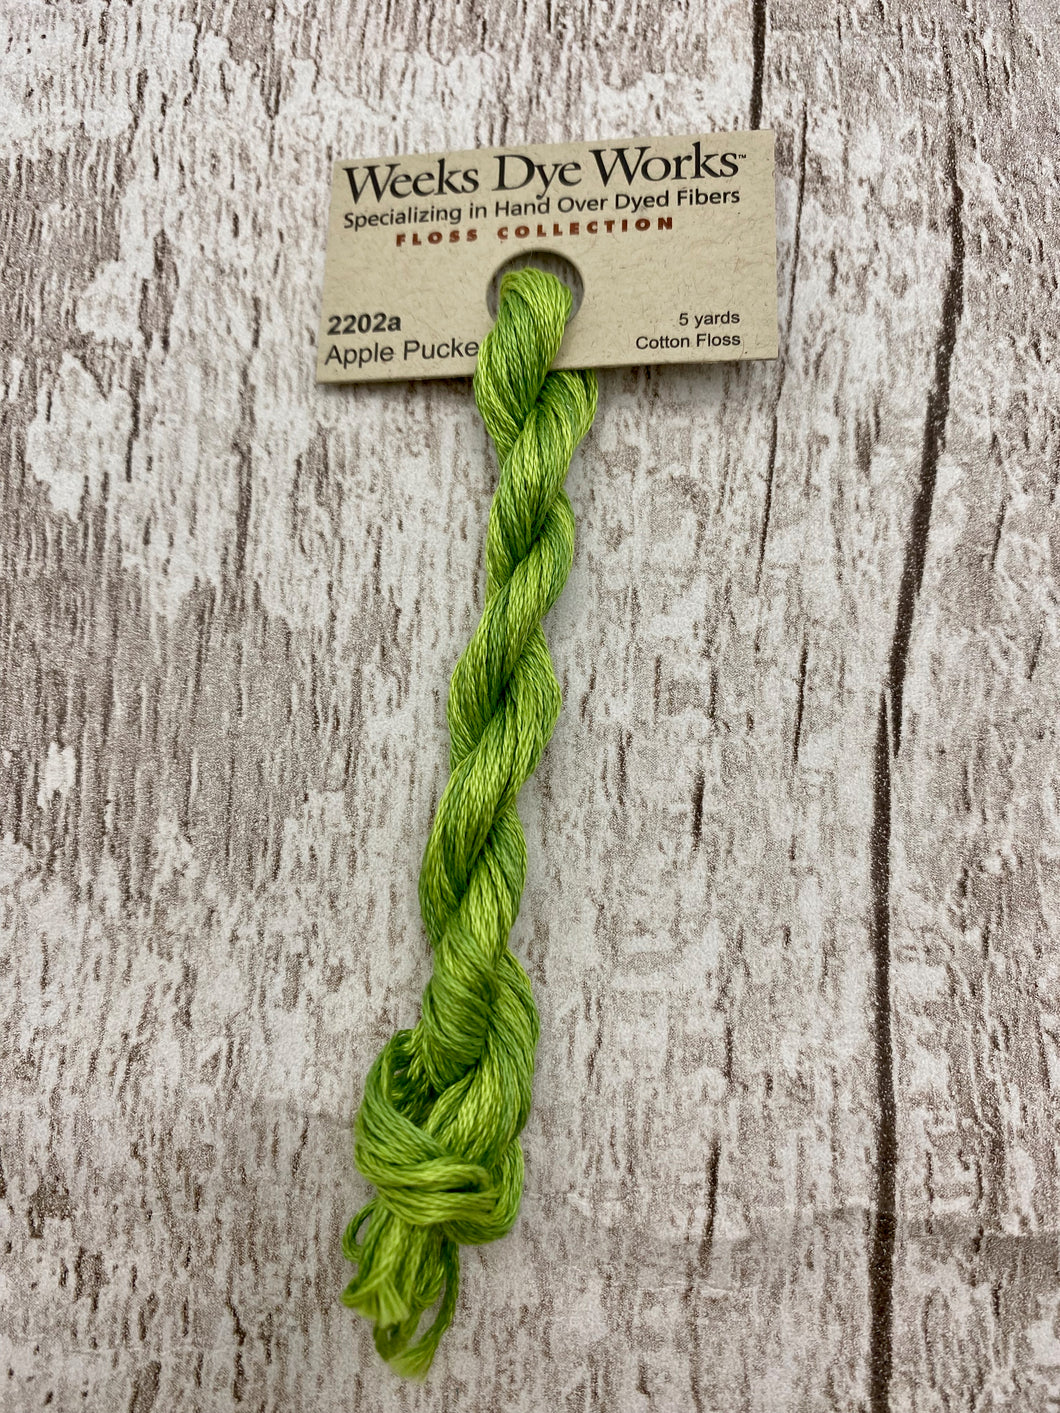 Apple Pucker (#2202a) Weeks Dye Works, 6-strand cotton floss